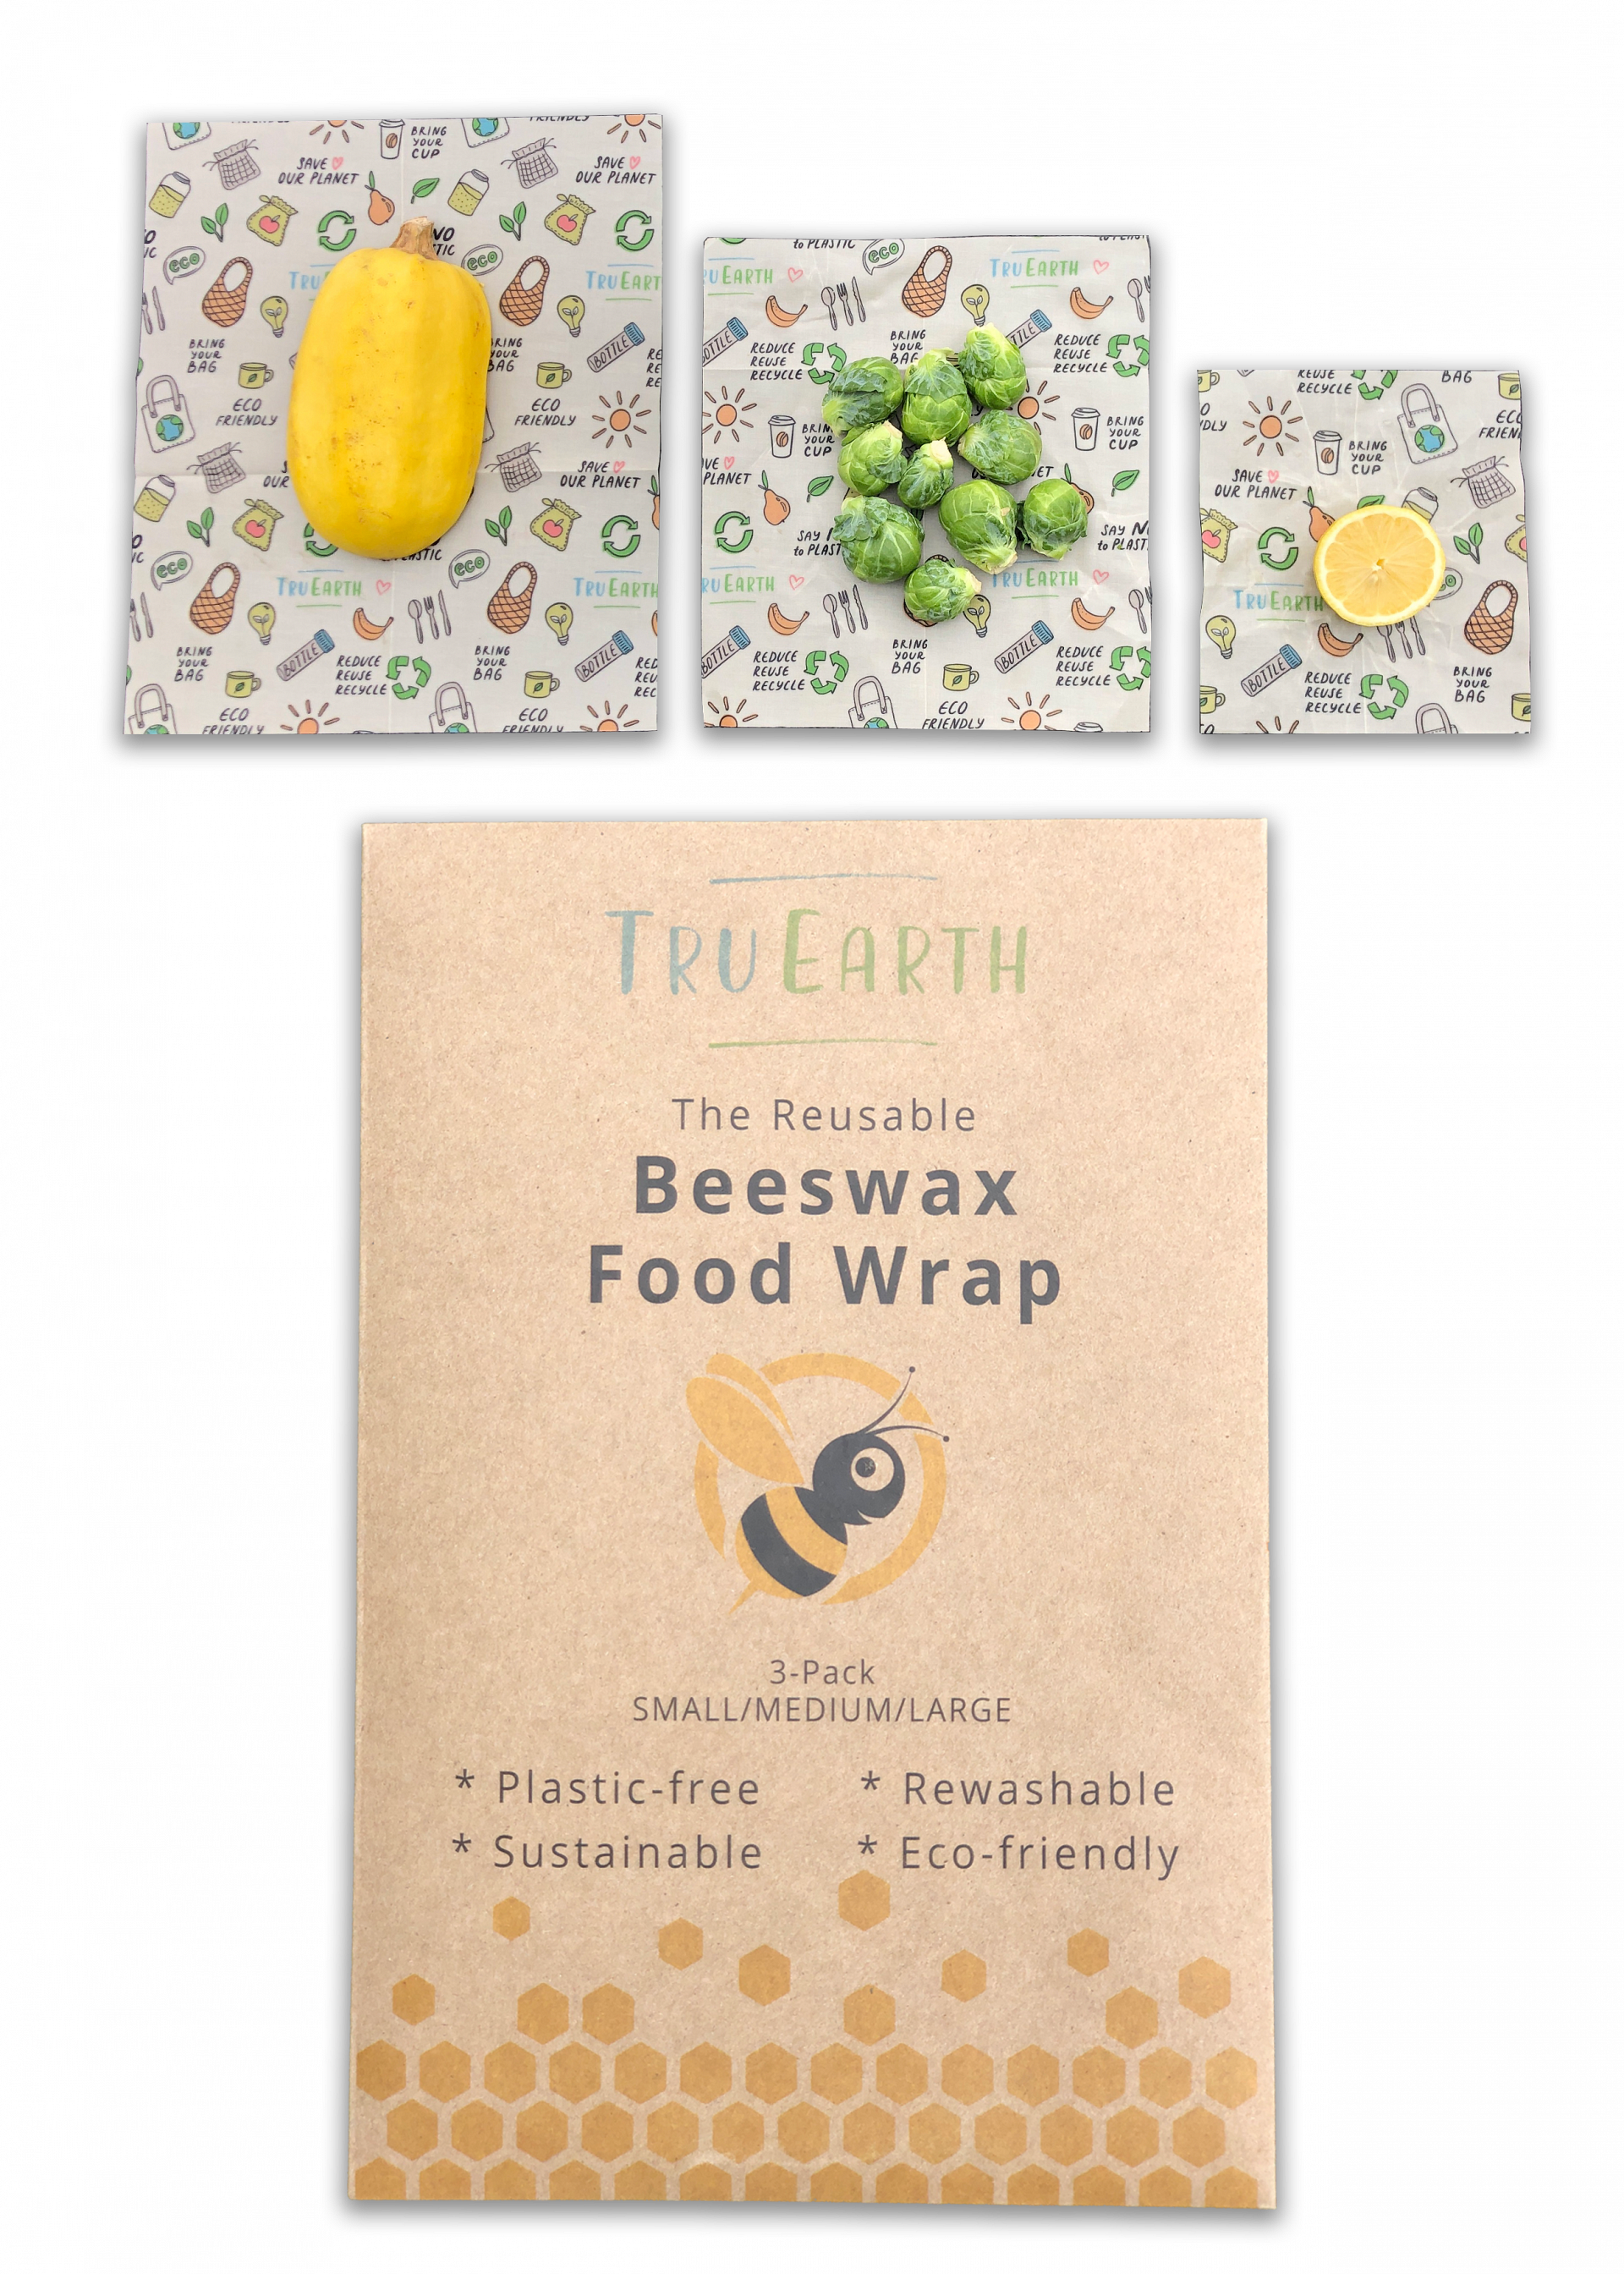 Beeswax Food Wrap by Tru Earth